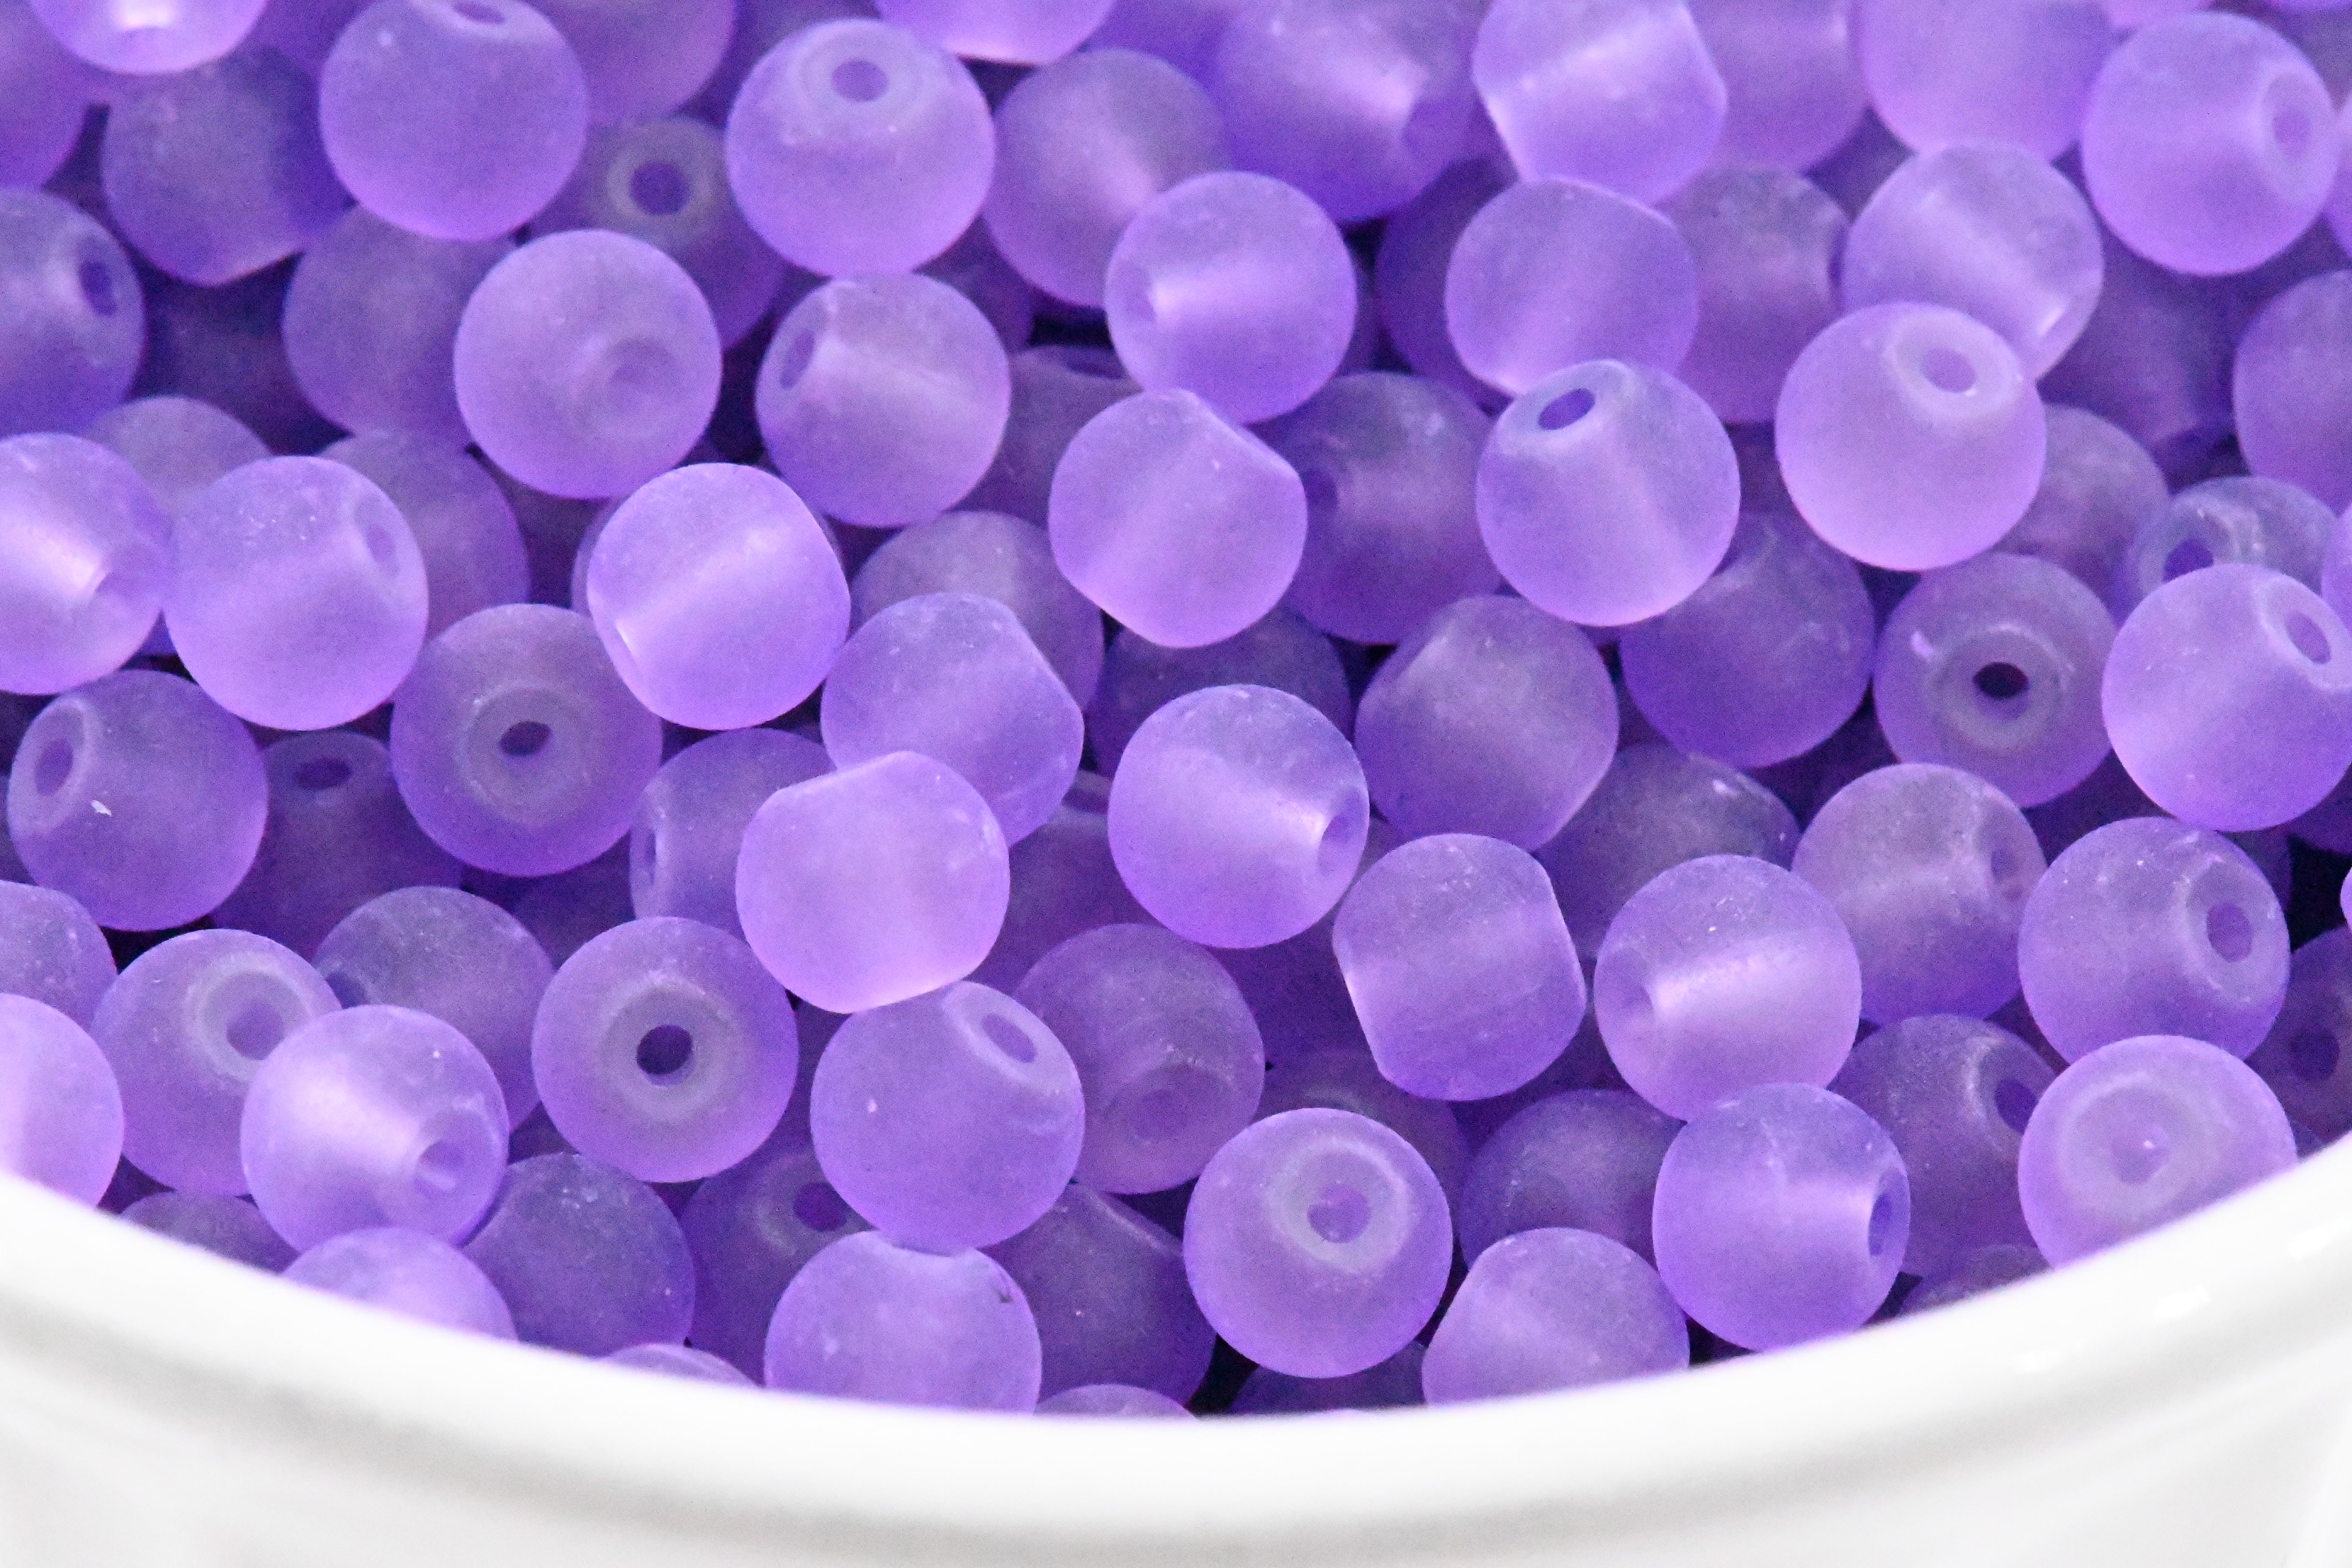 Purple 6mm Frosted Matte Glass Round Druk Beads - 100 beads